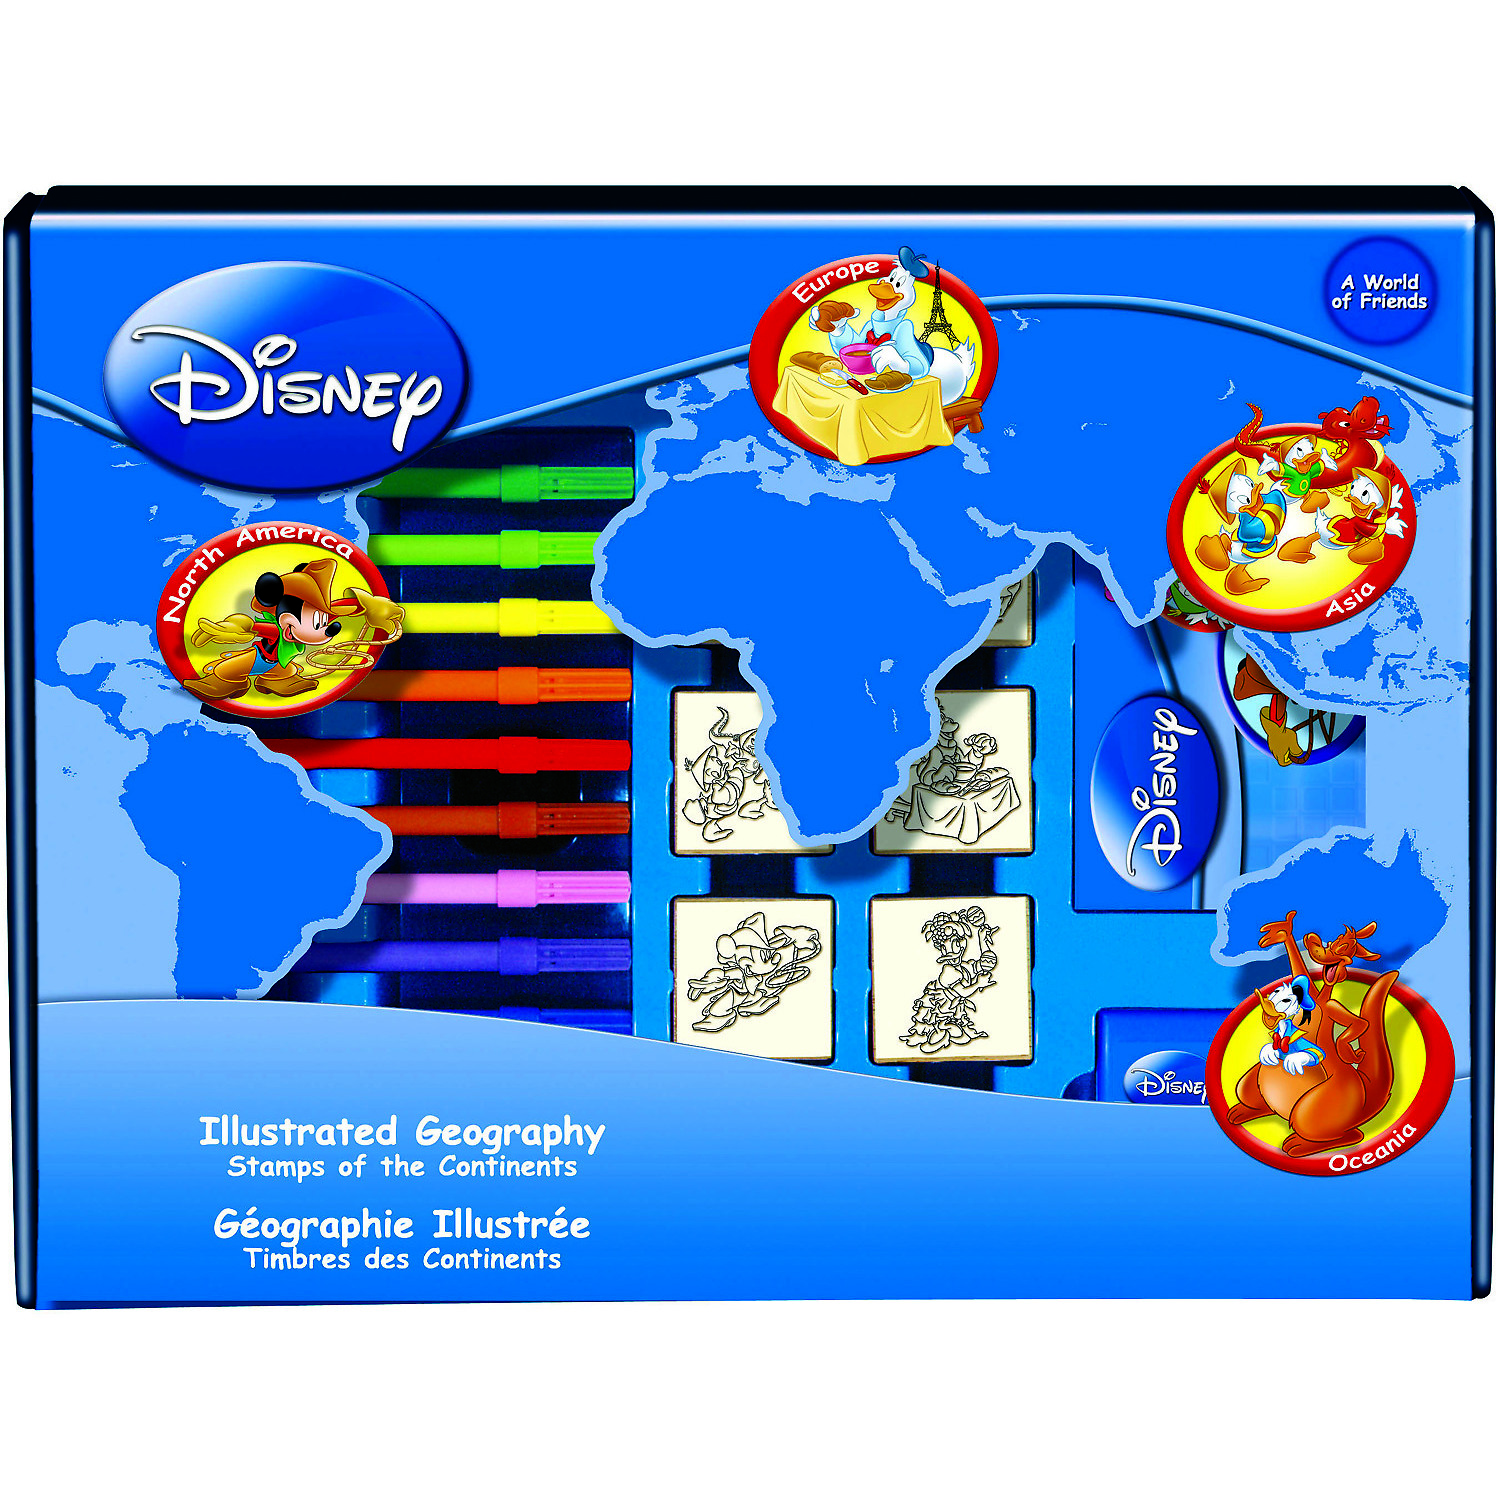 Set educativ cu stampile Geografia Disney 23 piese, 7 stampile, tus, 12 carioci, rigla, harta lumii si caiet cu activitati Multiprint MP1938